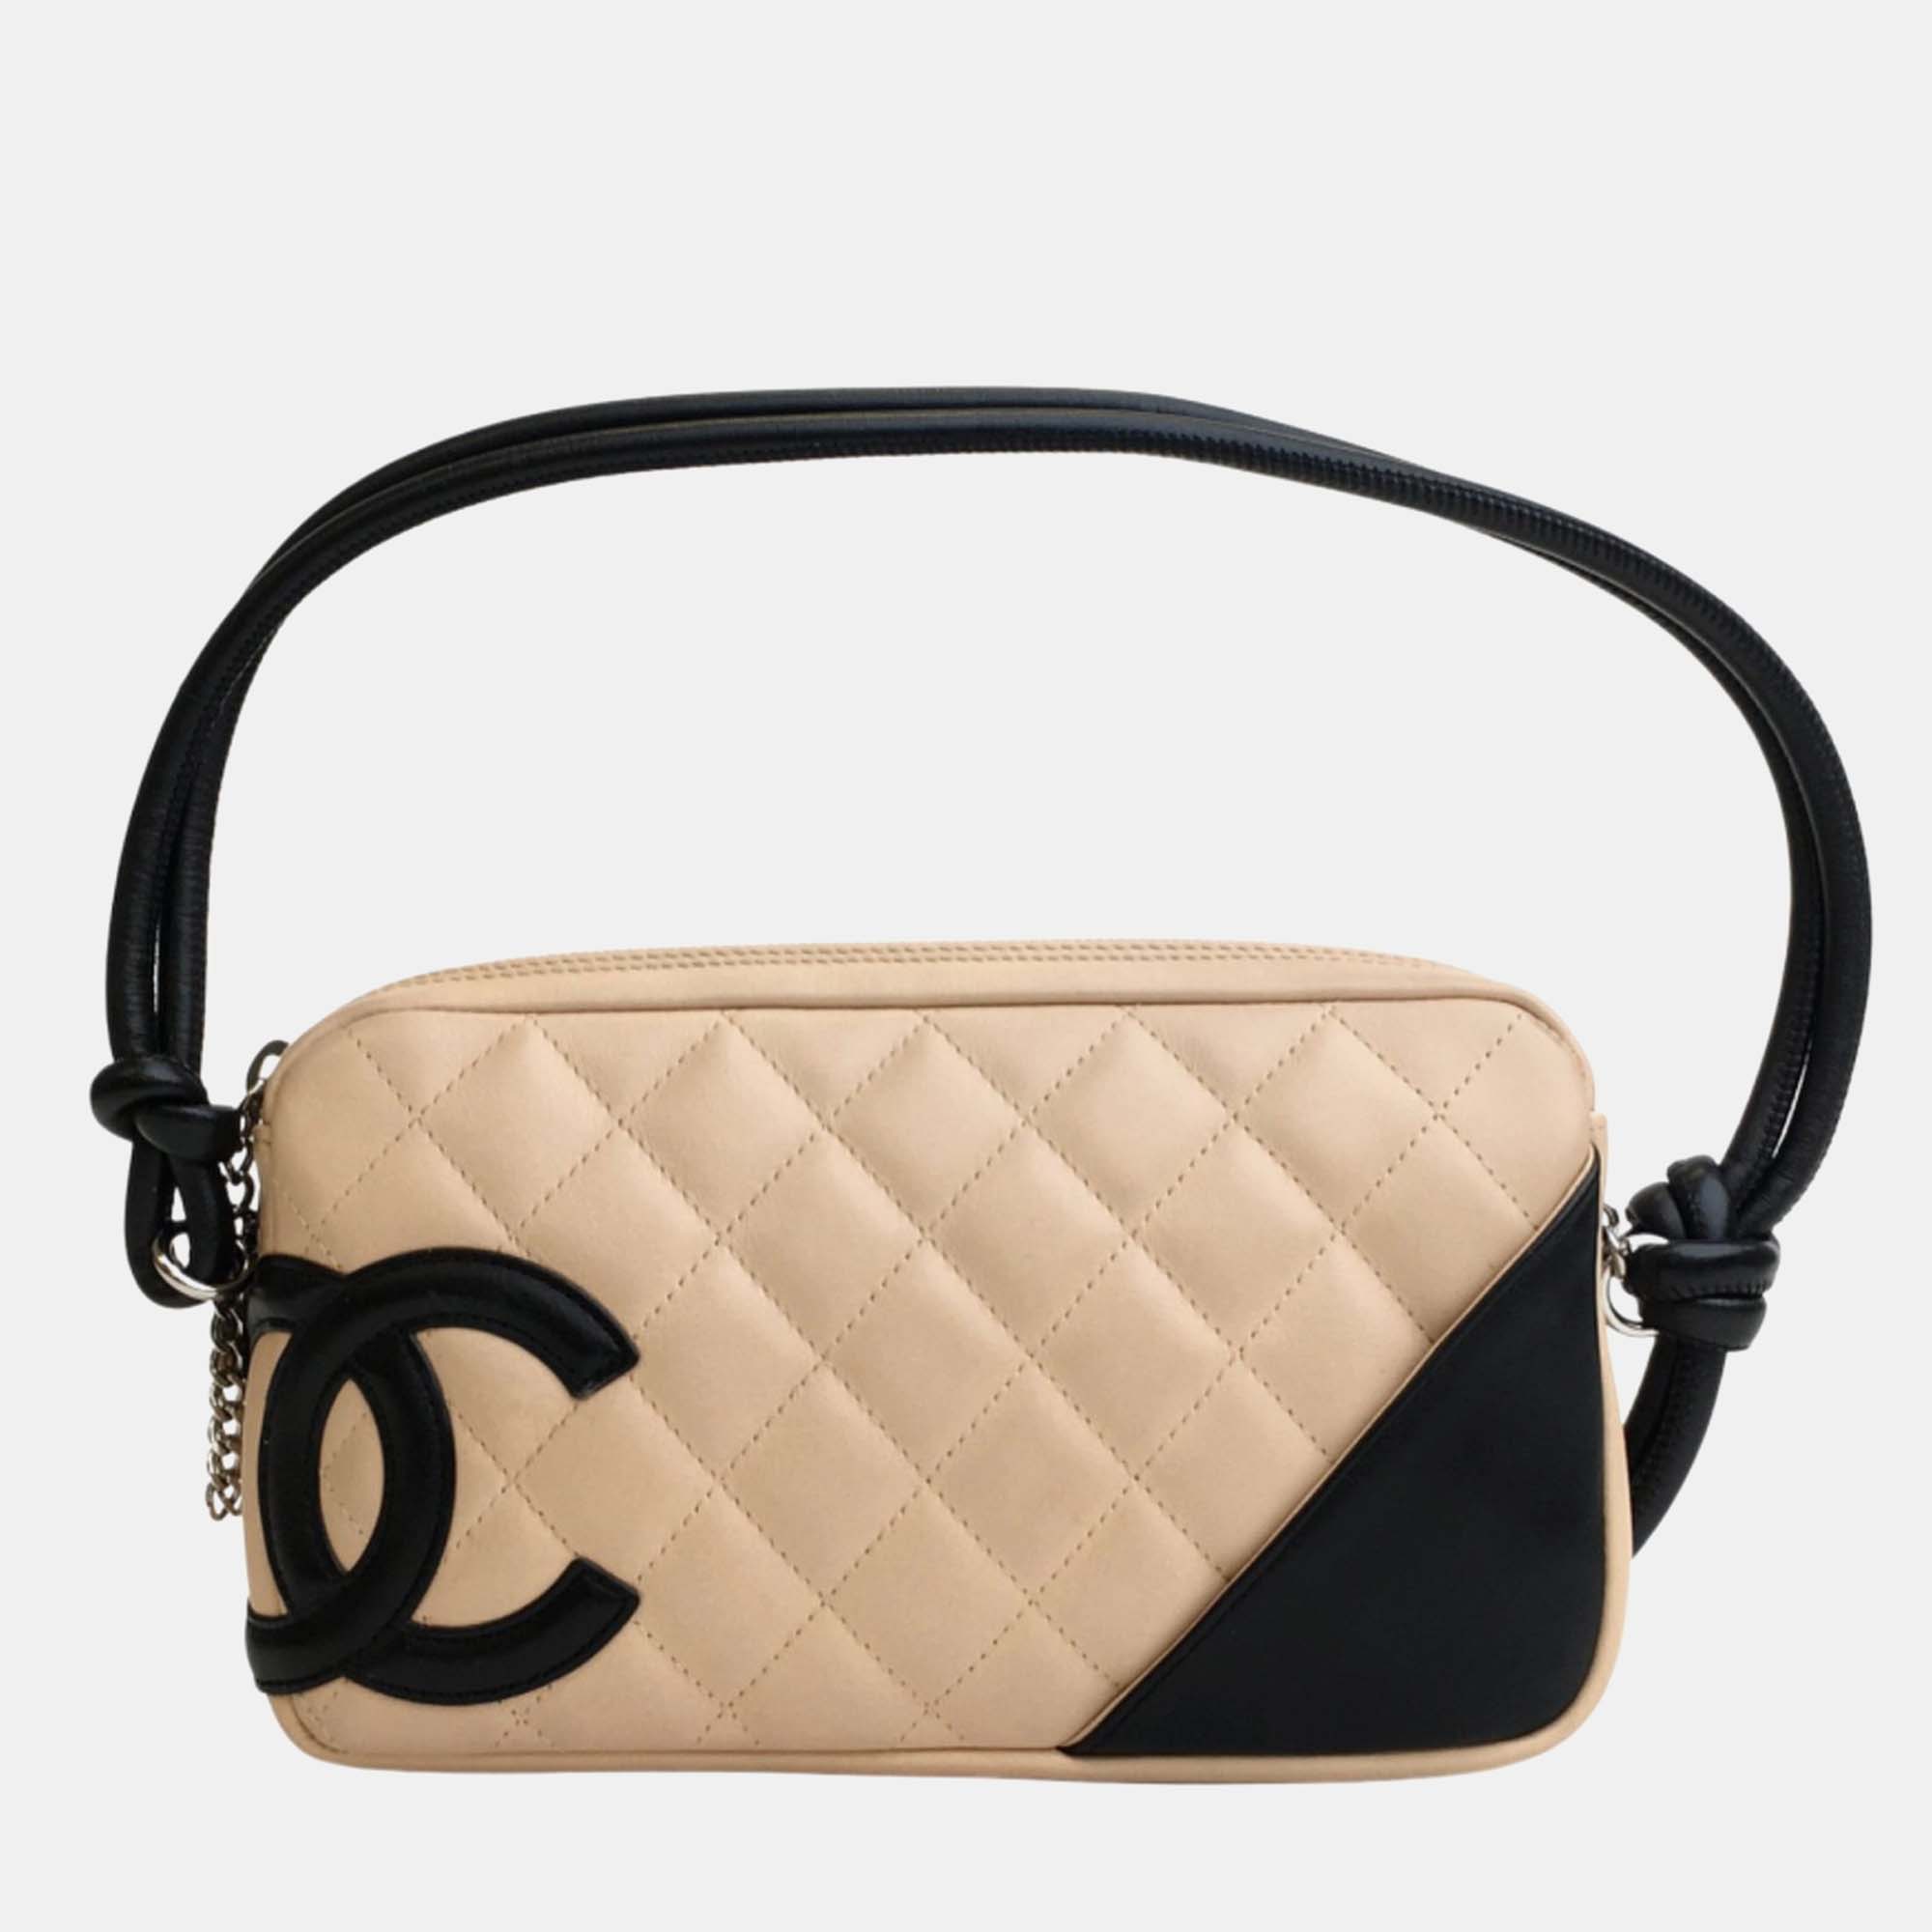 Chanel beige/black leather cambon shoulder bags